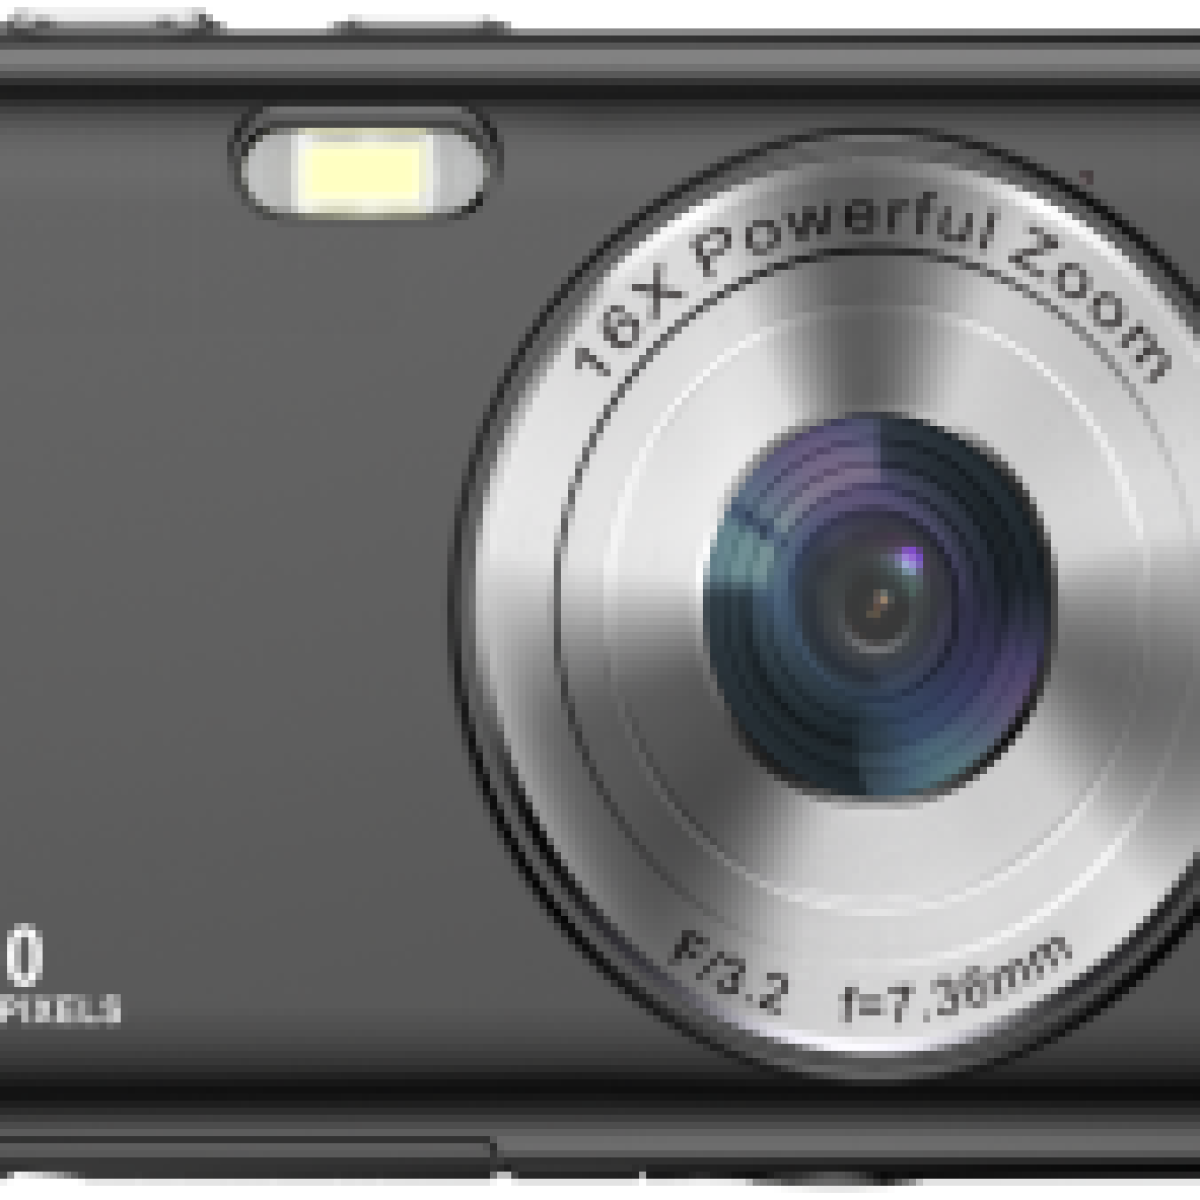 INF Digitalkamera 1080P 44MP Schwarz 16-fach 2,4-Zoll-Display, Zoom Digitalkamera 32-GB-Karte